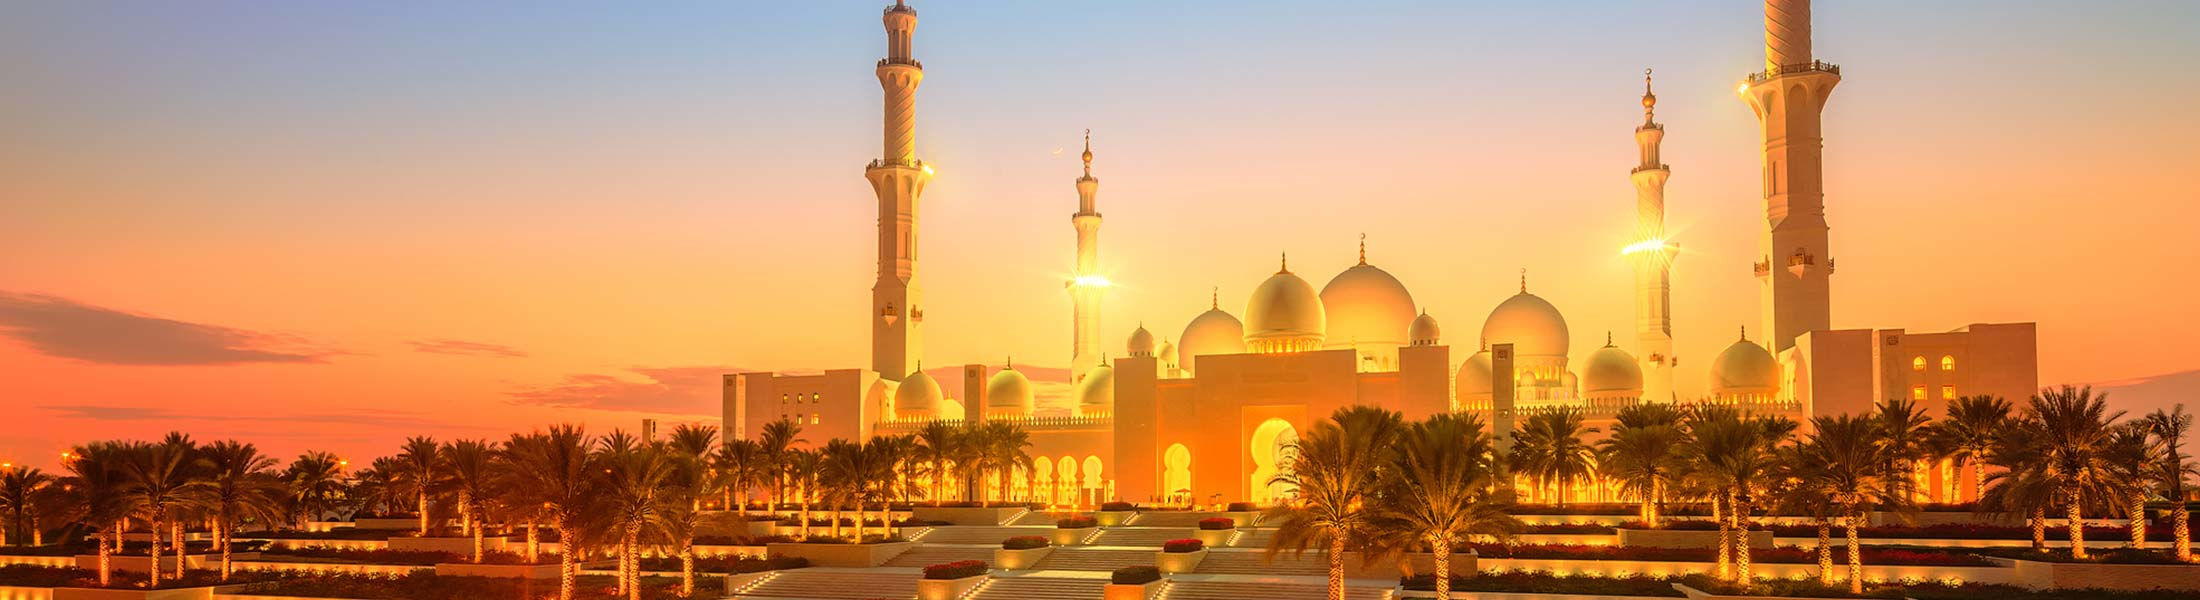 Atardecer en Dubai, al fondo la Mezquita Sheikh Zayed